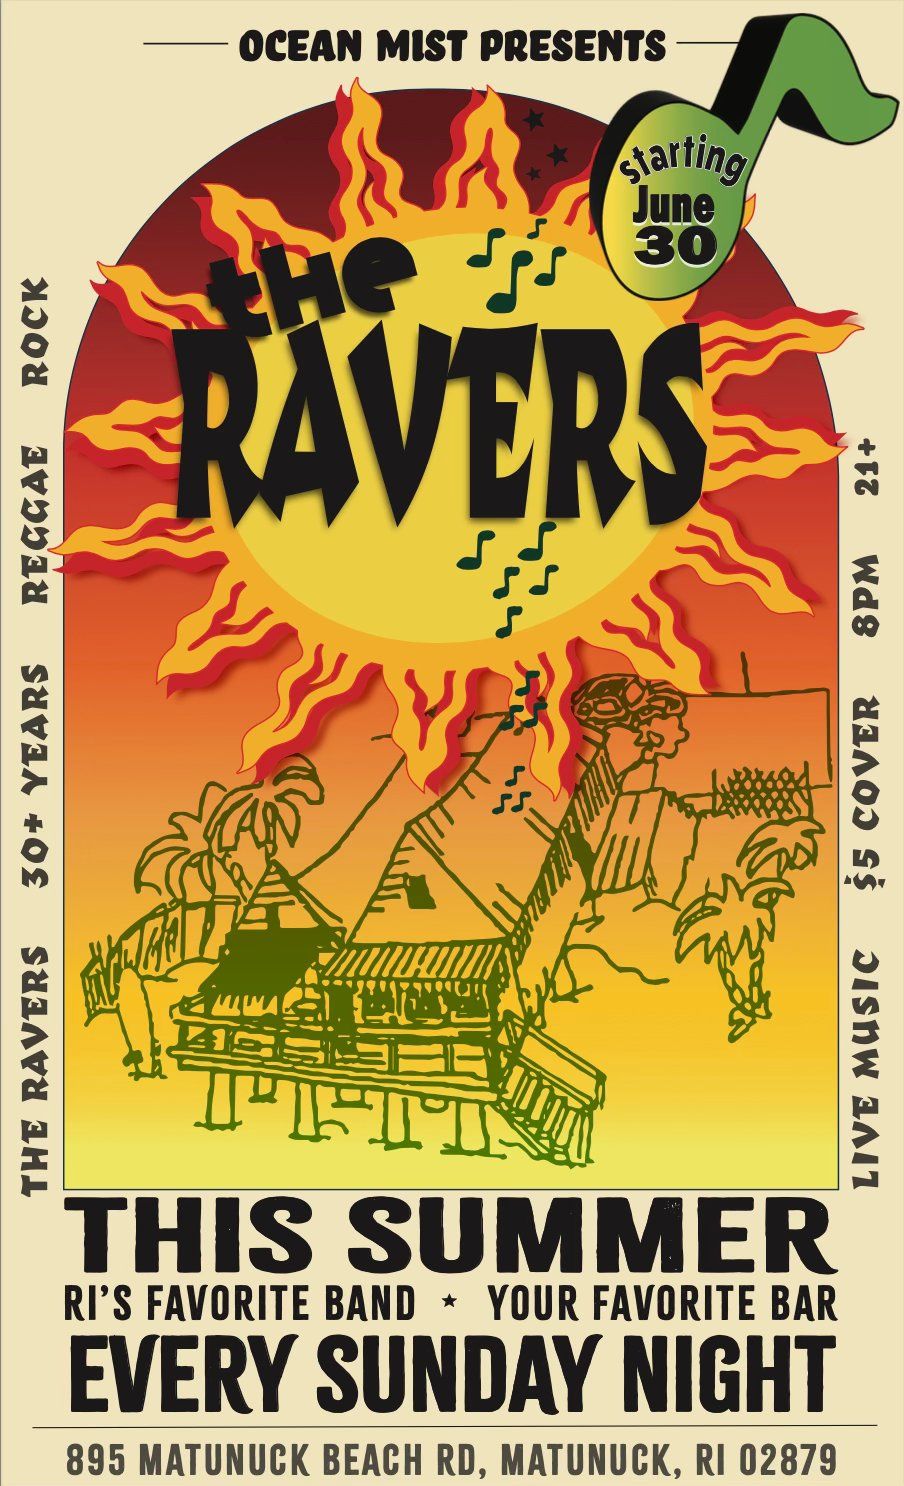 The Ravers -every Sunday night at Ocean Mist!